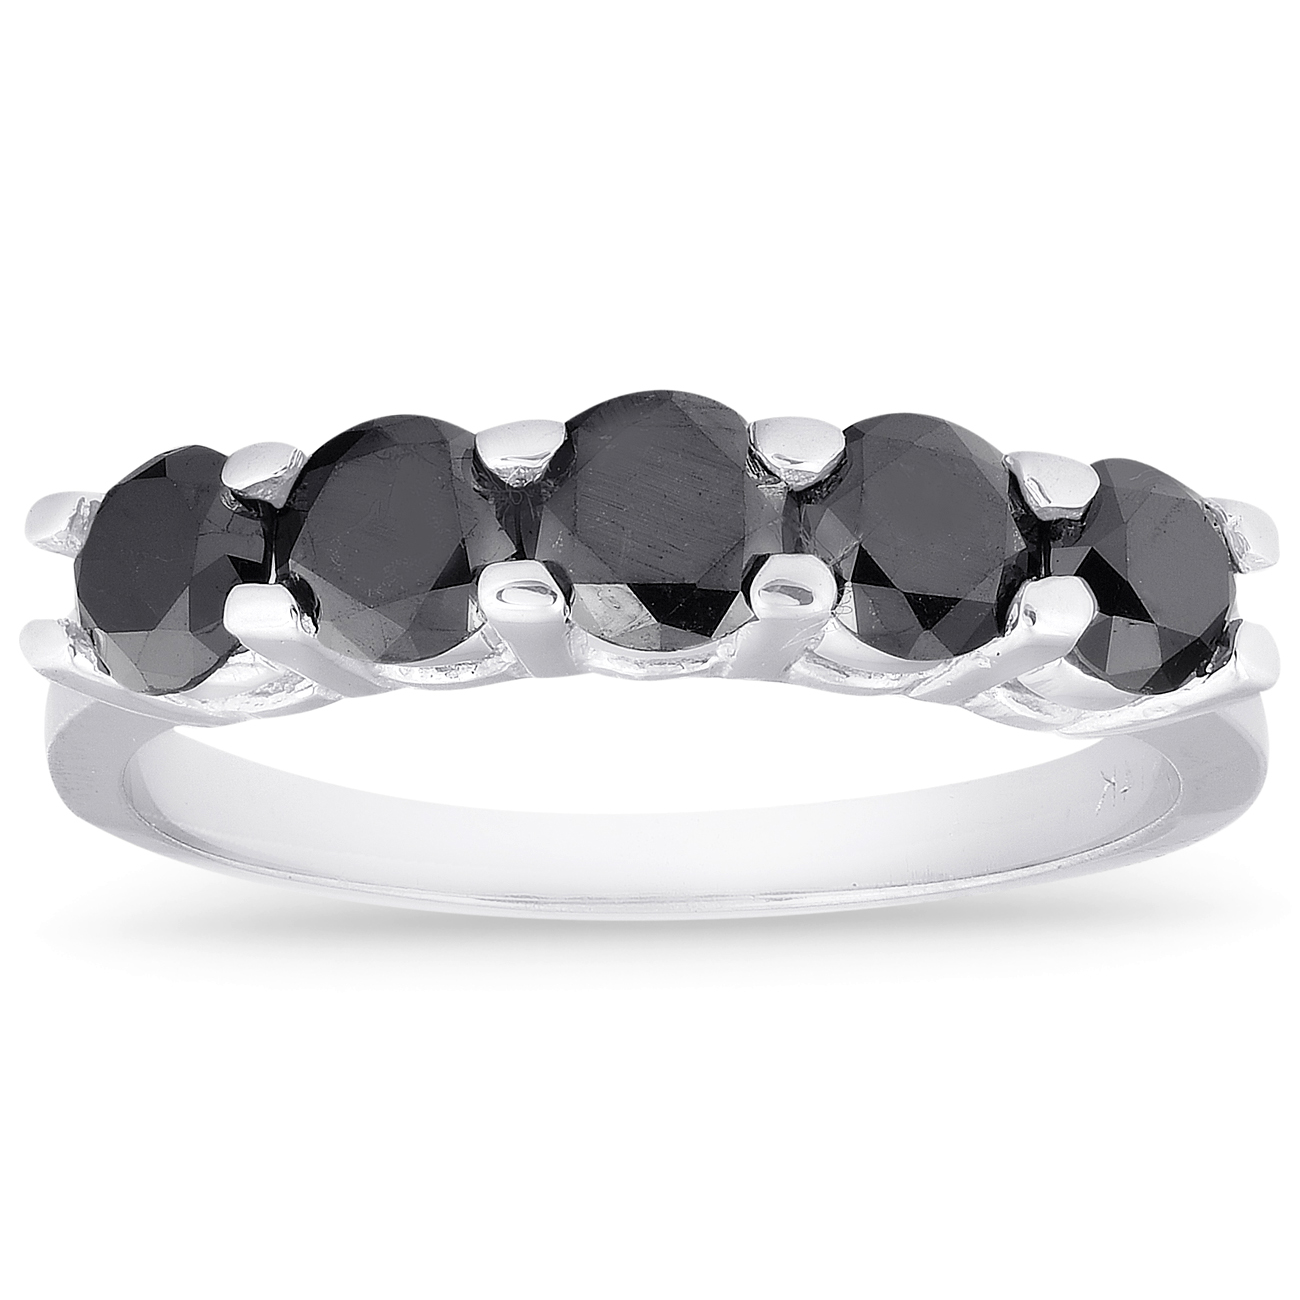 Black and White Diamond Ring | Bijoux Majesty